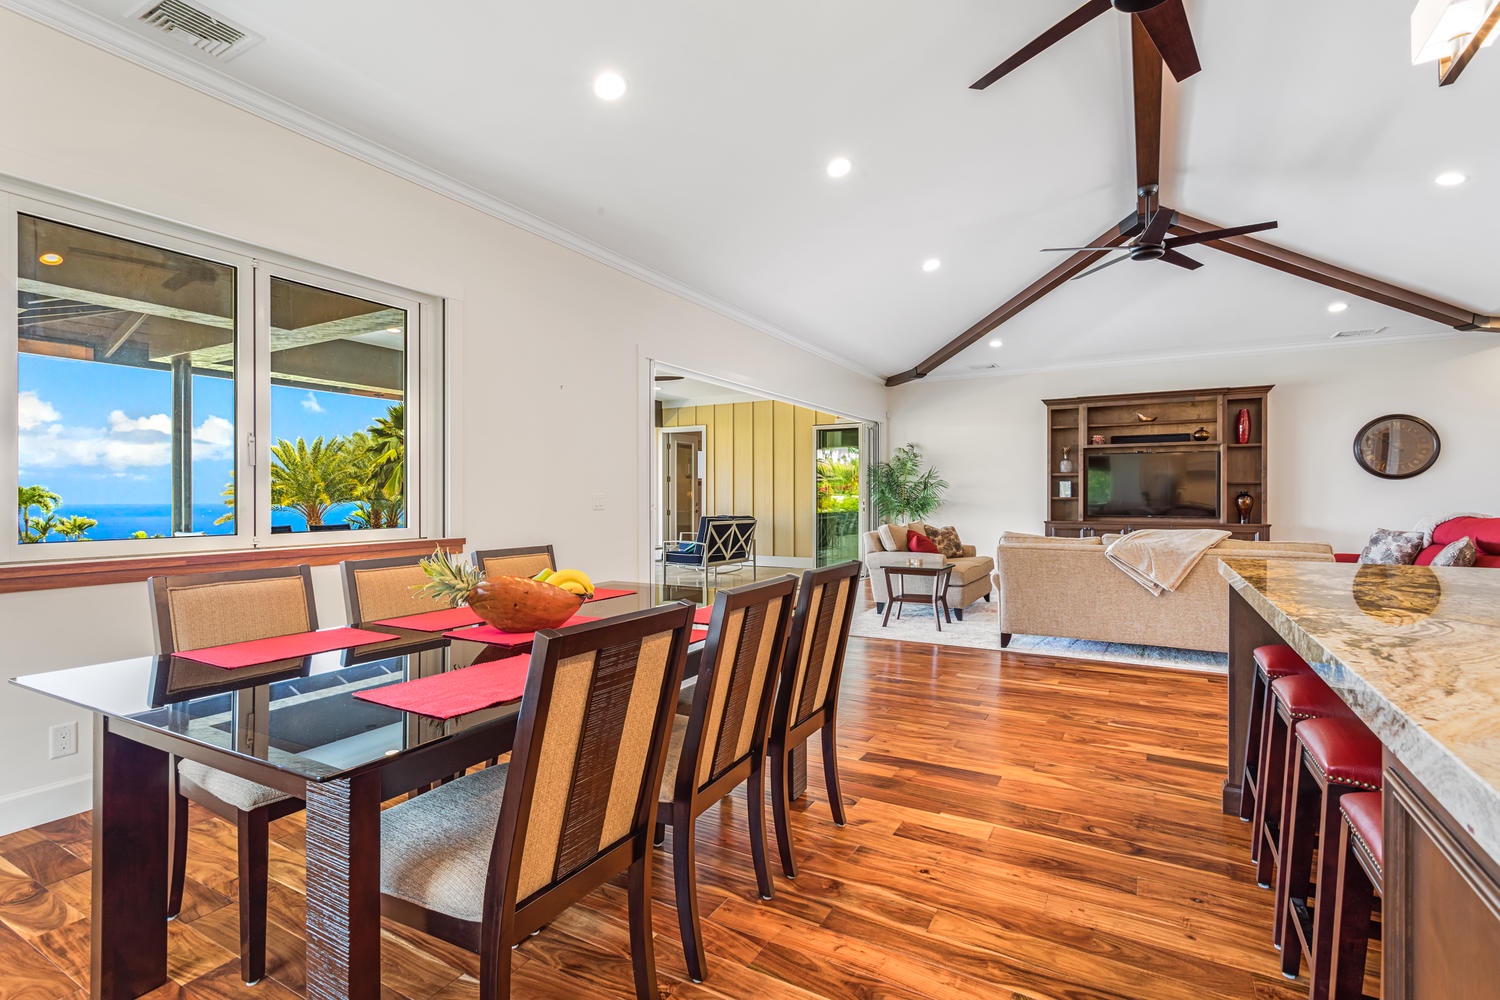 Kailua Kona Vacation Rentals, Ohana le'ale'a - Dining room seating for the whole family!